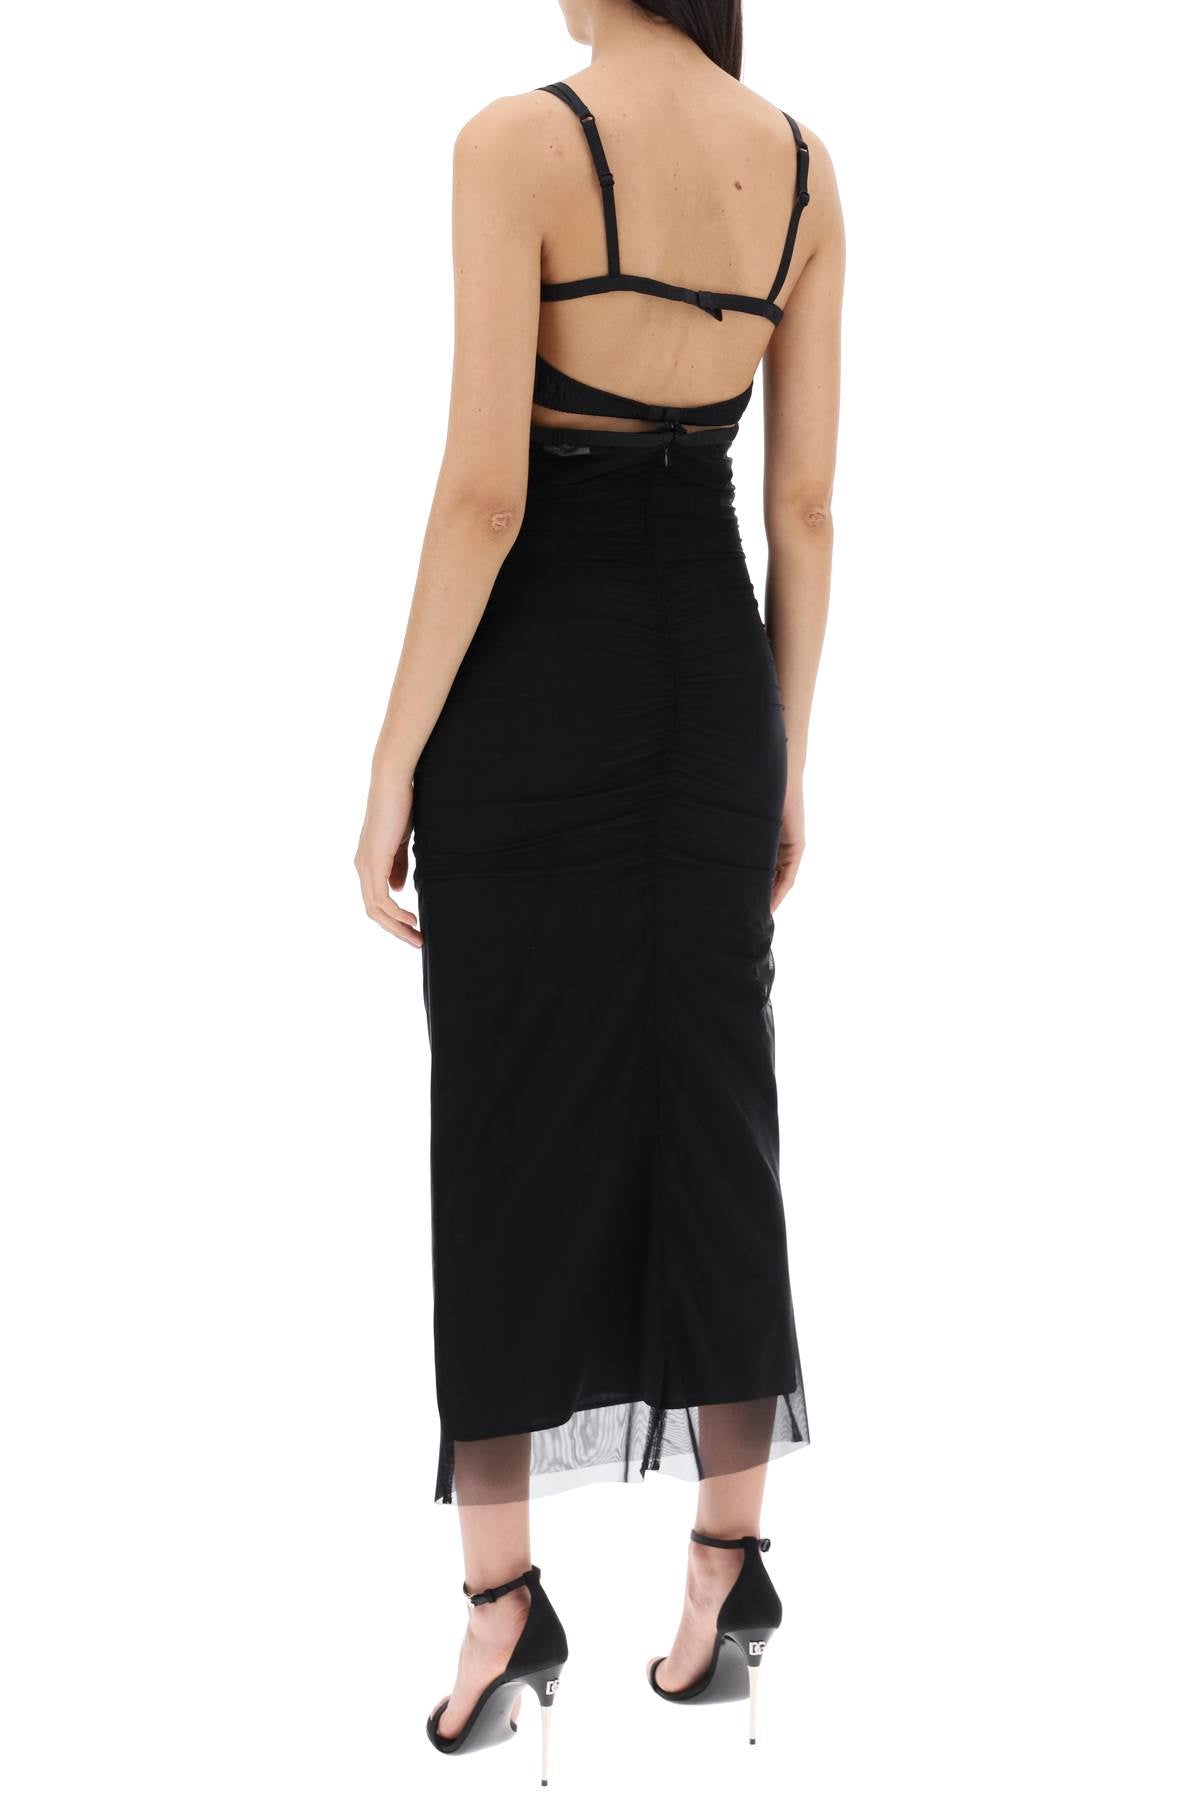 Shop Dolce & Gabbana Elegant Black Sheath Dress With Lace Bustier Details